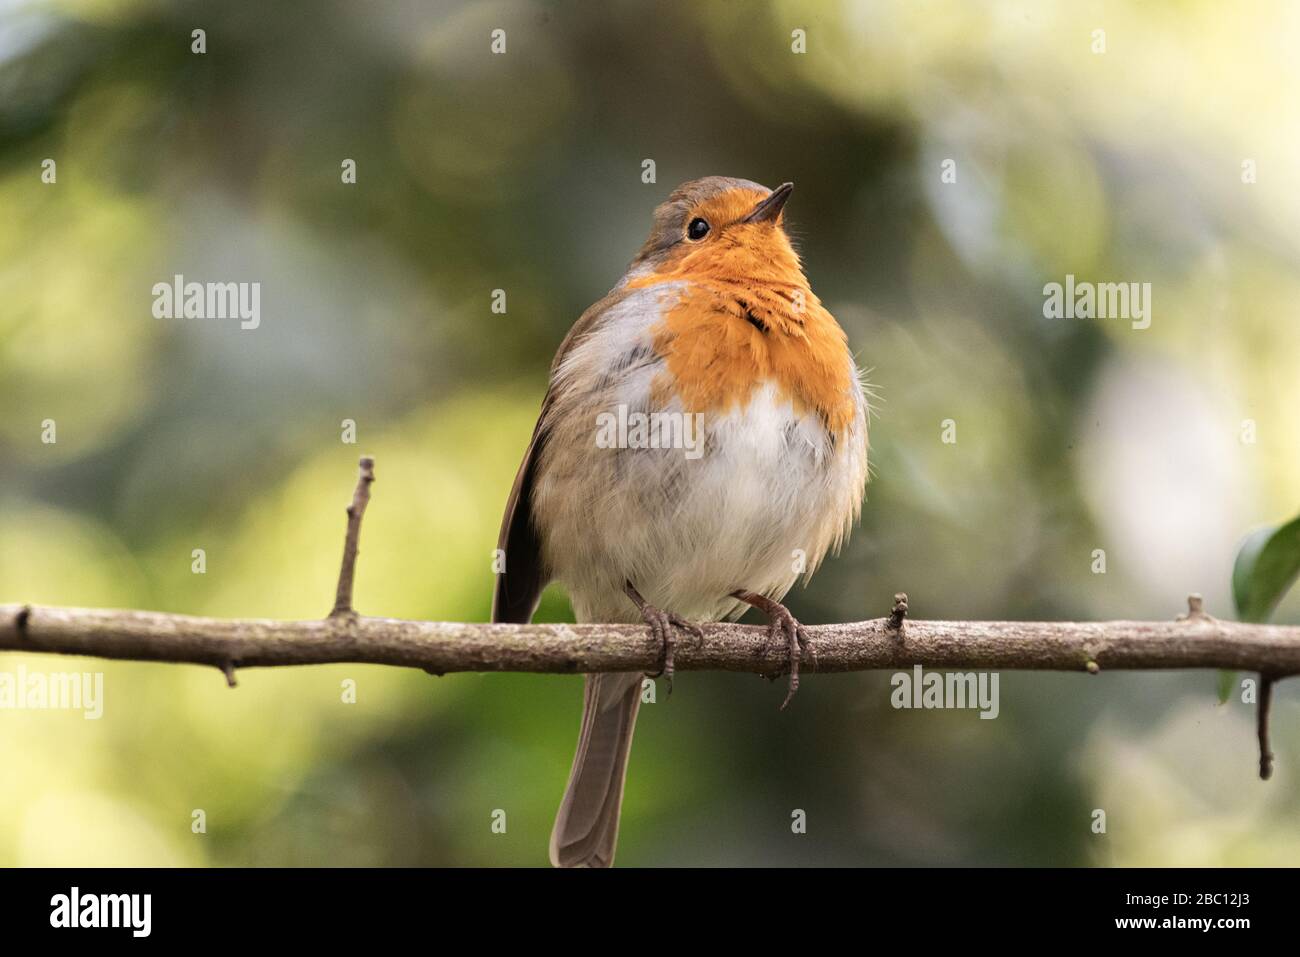 UK Wildlife - robin sat on a branch - Towcester, Northamptonshire, UK Stock Photo